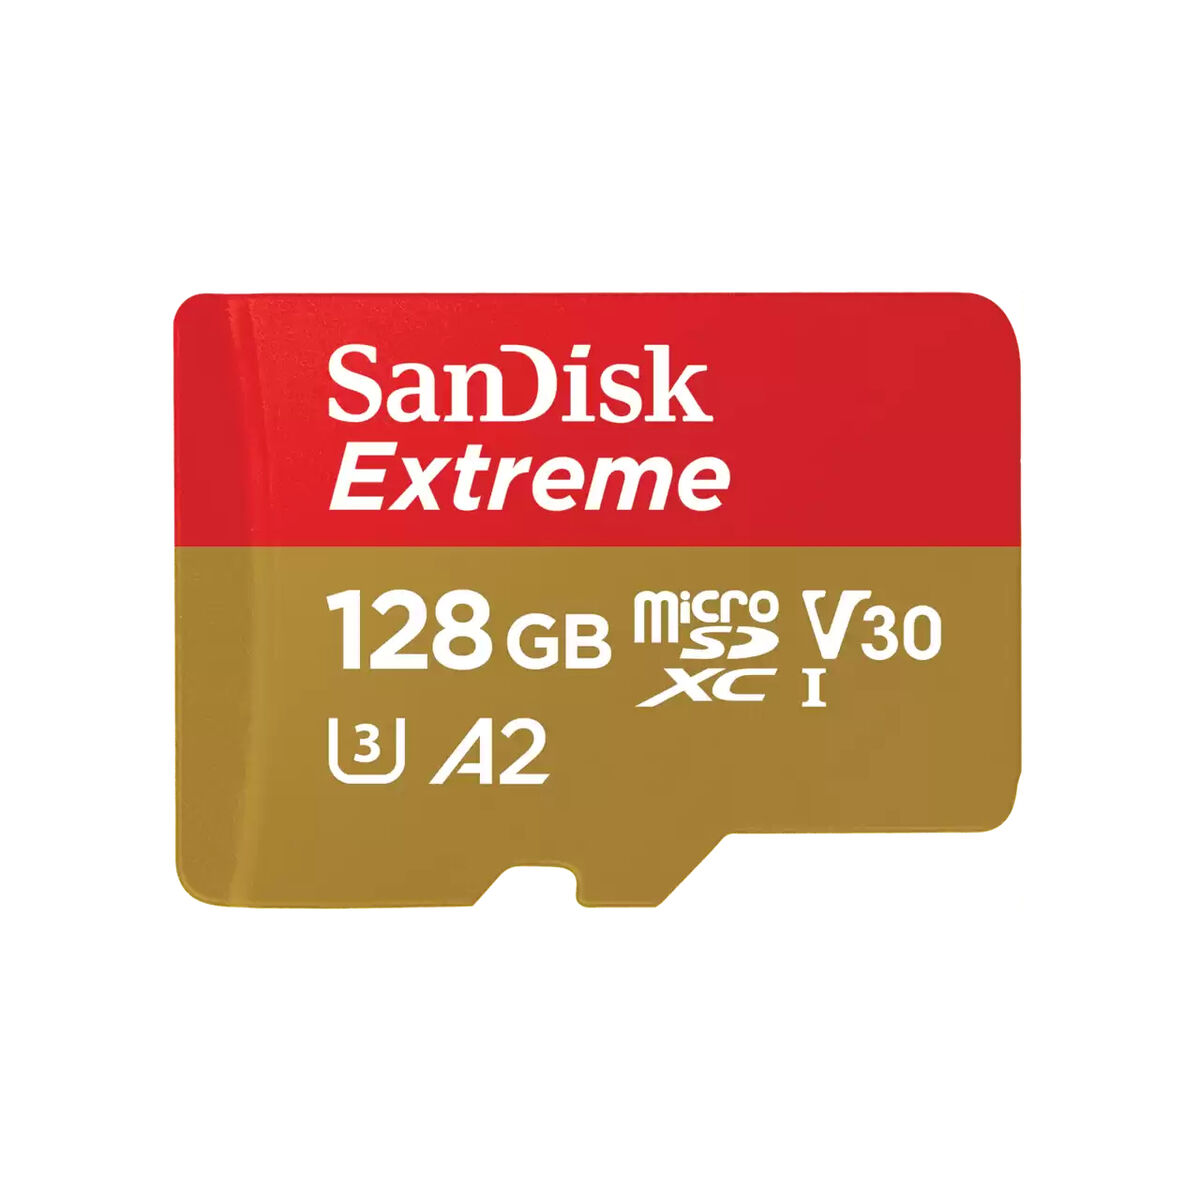 WESTERN DIGITAL A Micro-SD card, 984466, MB/s Memory 190 128 GB